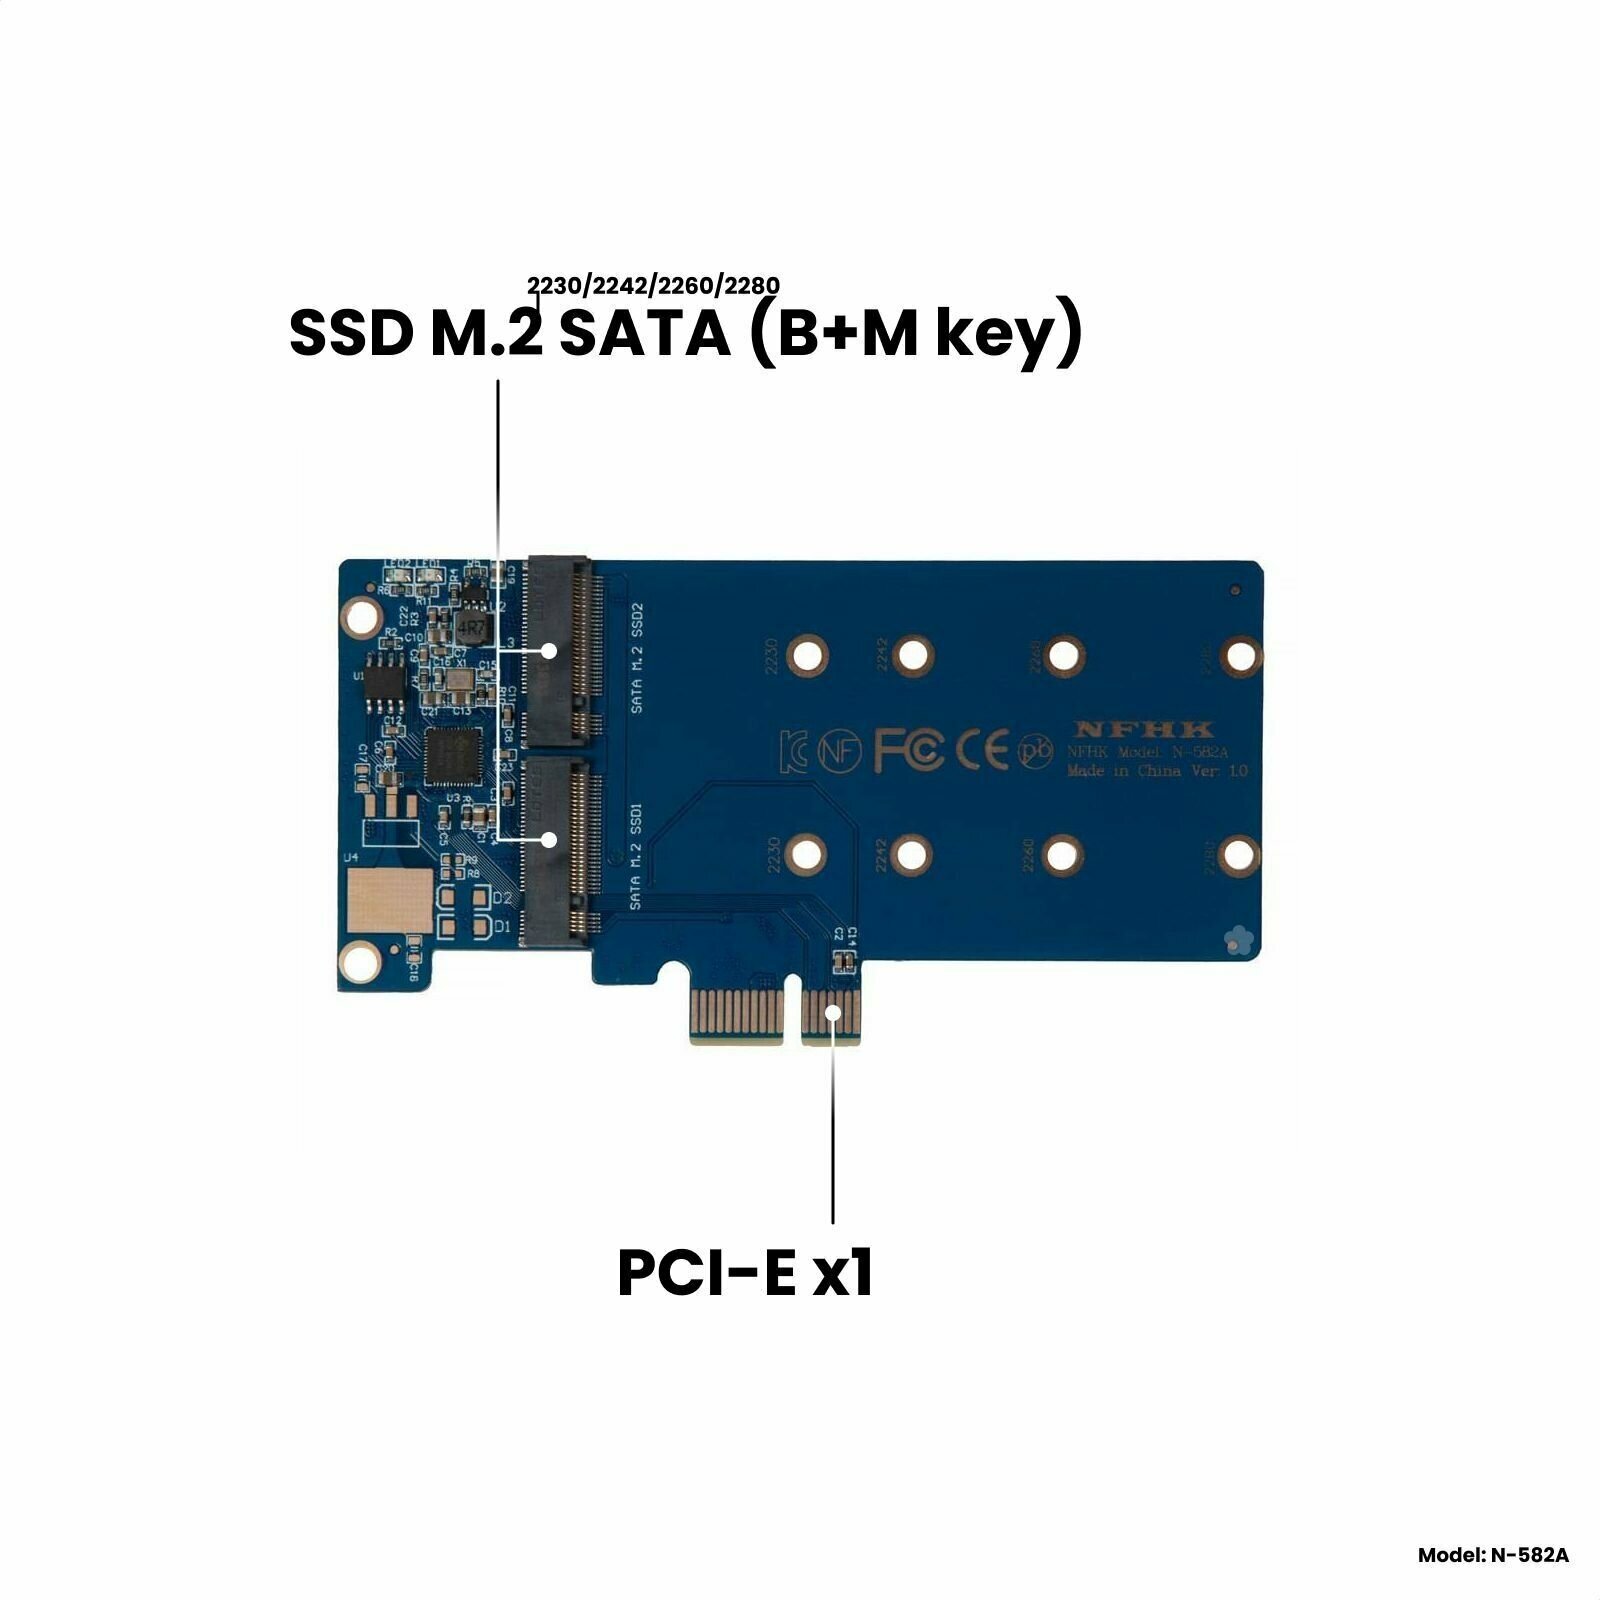 Адаптер-переходник (плата расширения) для установки 2 накопителей SSD M.2 2230-2280 SATA (B+M key) в слот PCI-E х1/x4/x8/x16, синий, NFHK N-582A